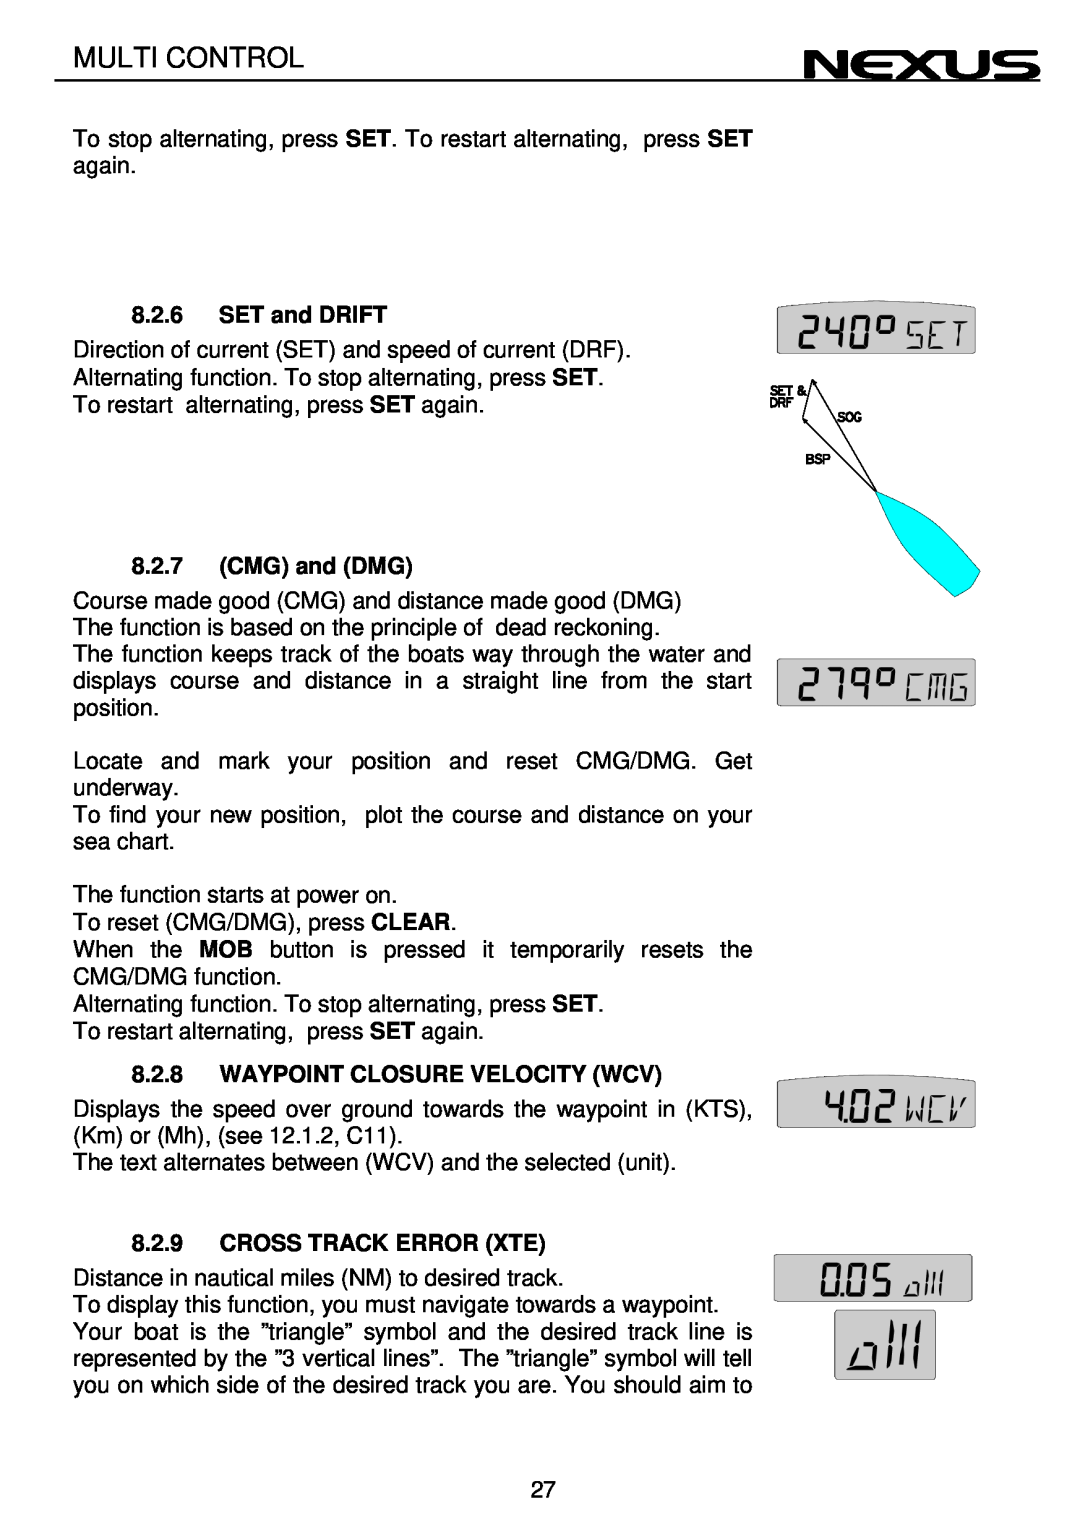 Nexus 21 Multi Control operation manual 8.2.6SET and DRIFT, 8.2.7CMG and DMG, 8.2.8WAYPOINT CLOSURE VELOCITY WCV 